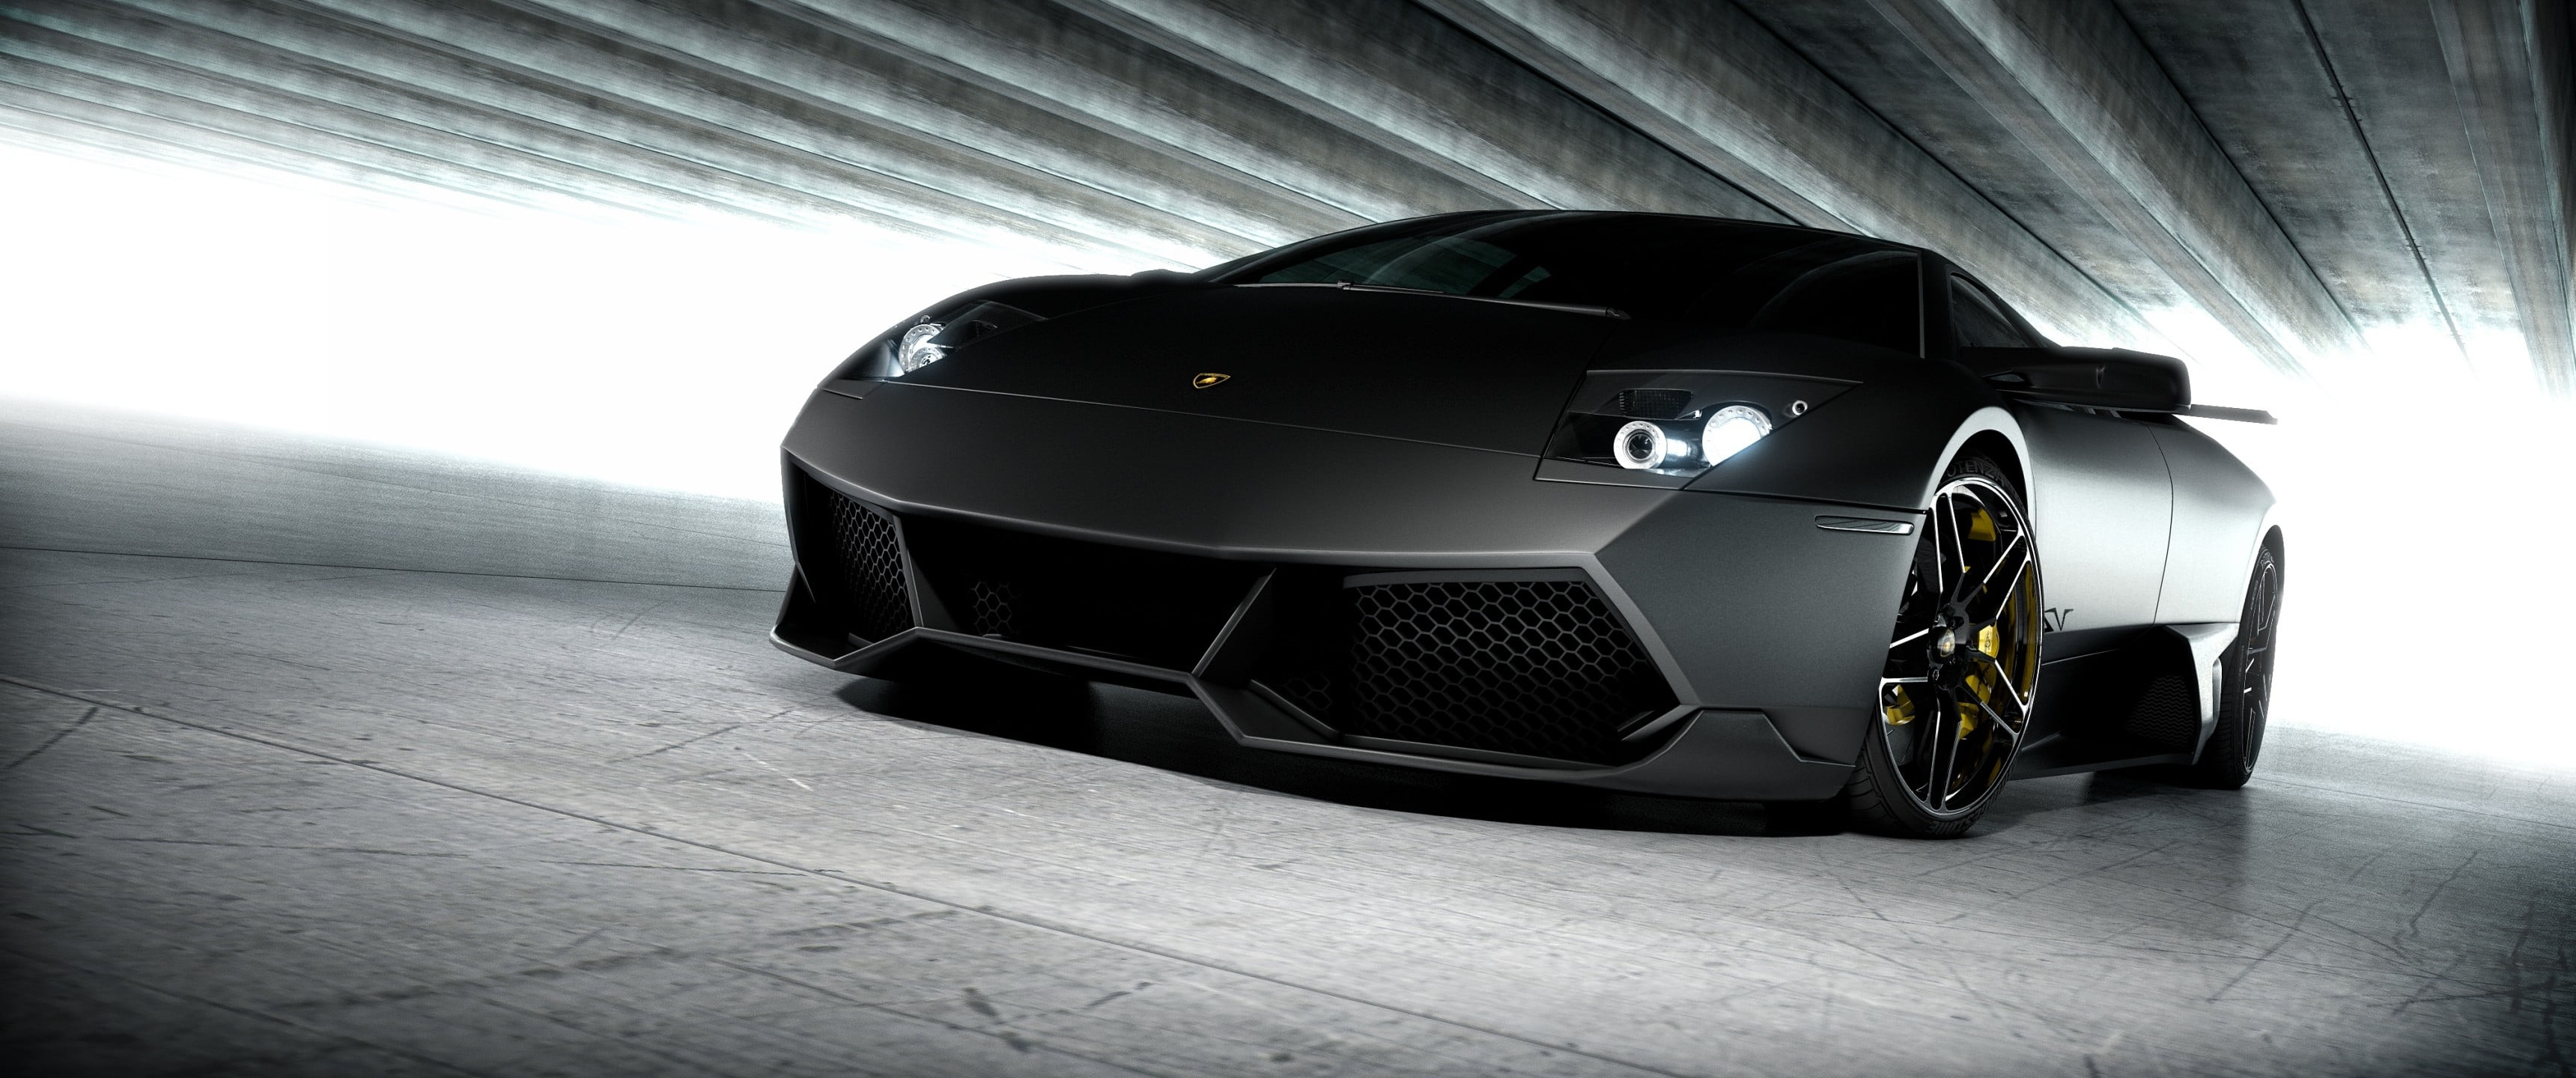 Black sports car, Lamborghini Murcielago LP 670-4 SV, car ...